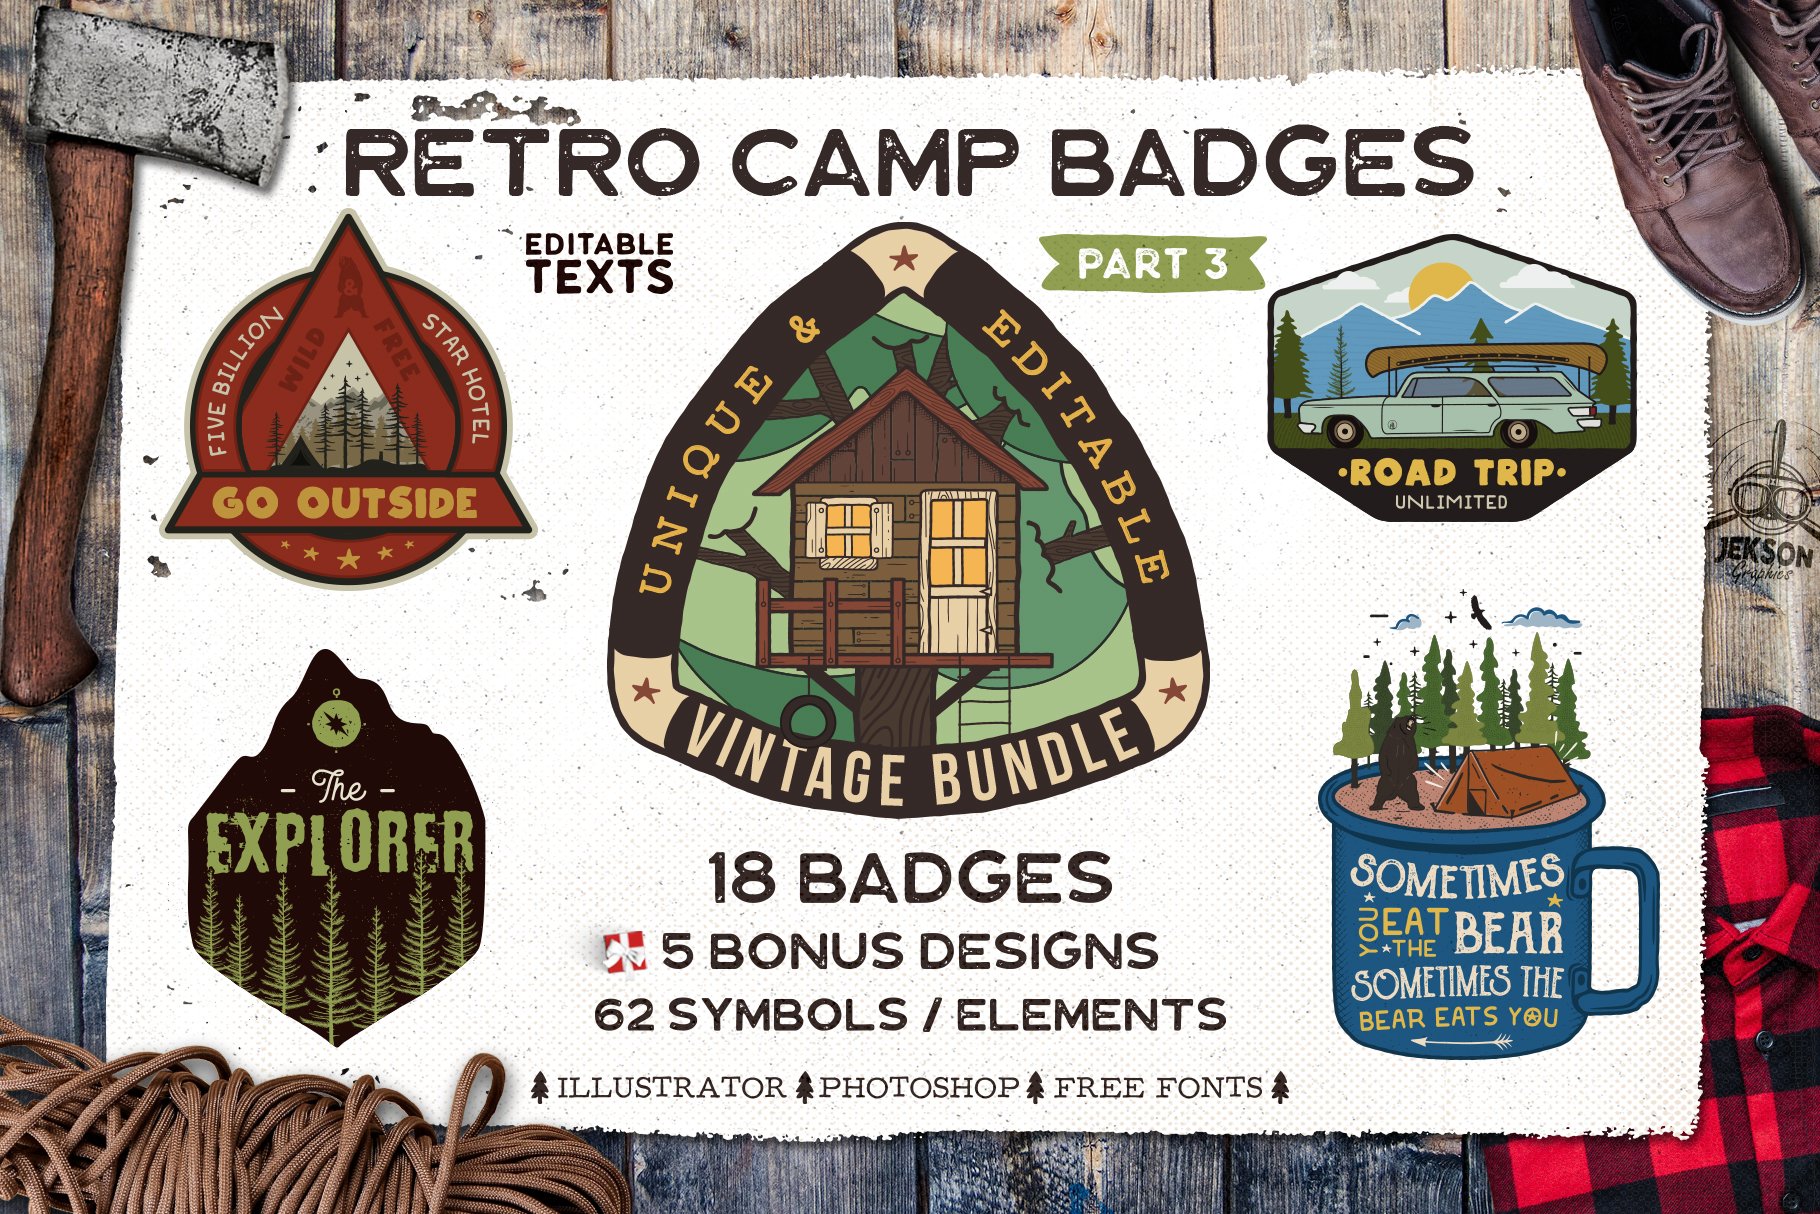 Retro Camp Badges Logos. Part 3 cover image.